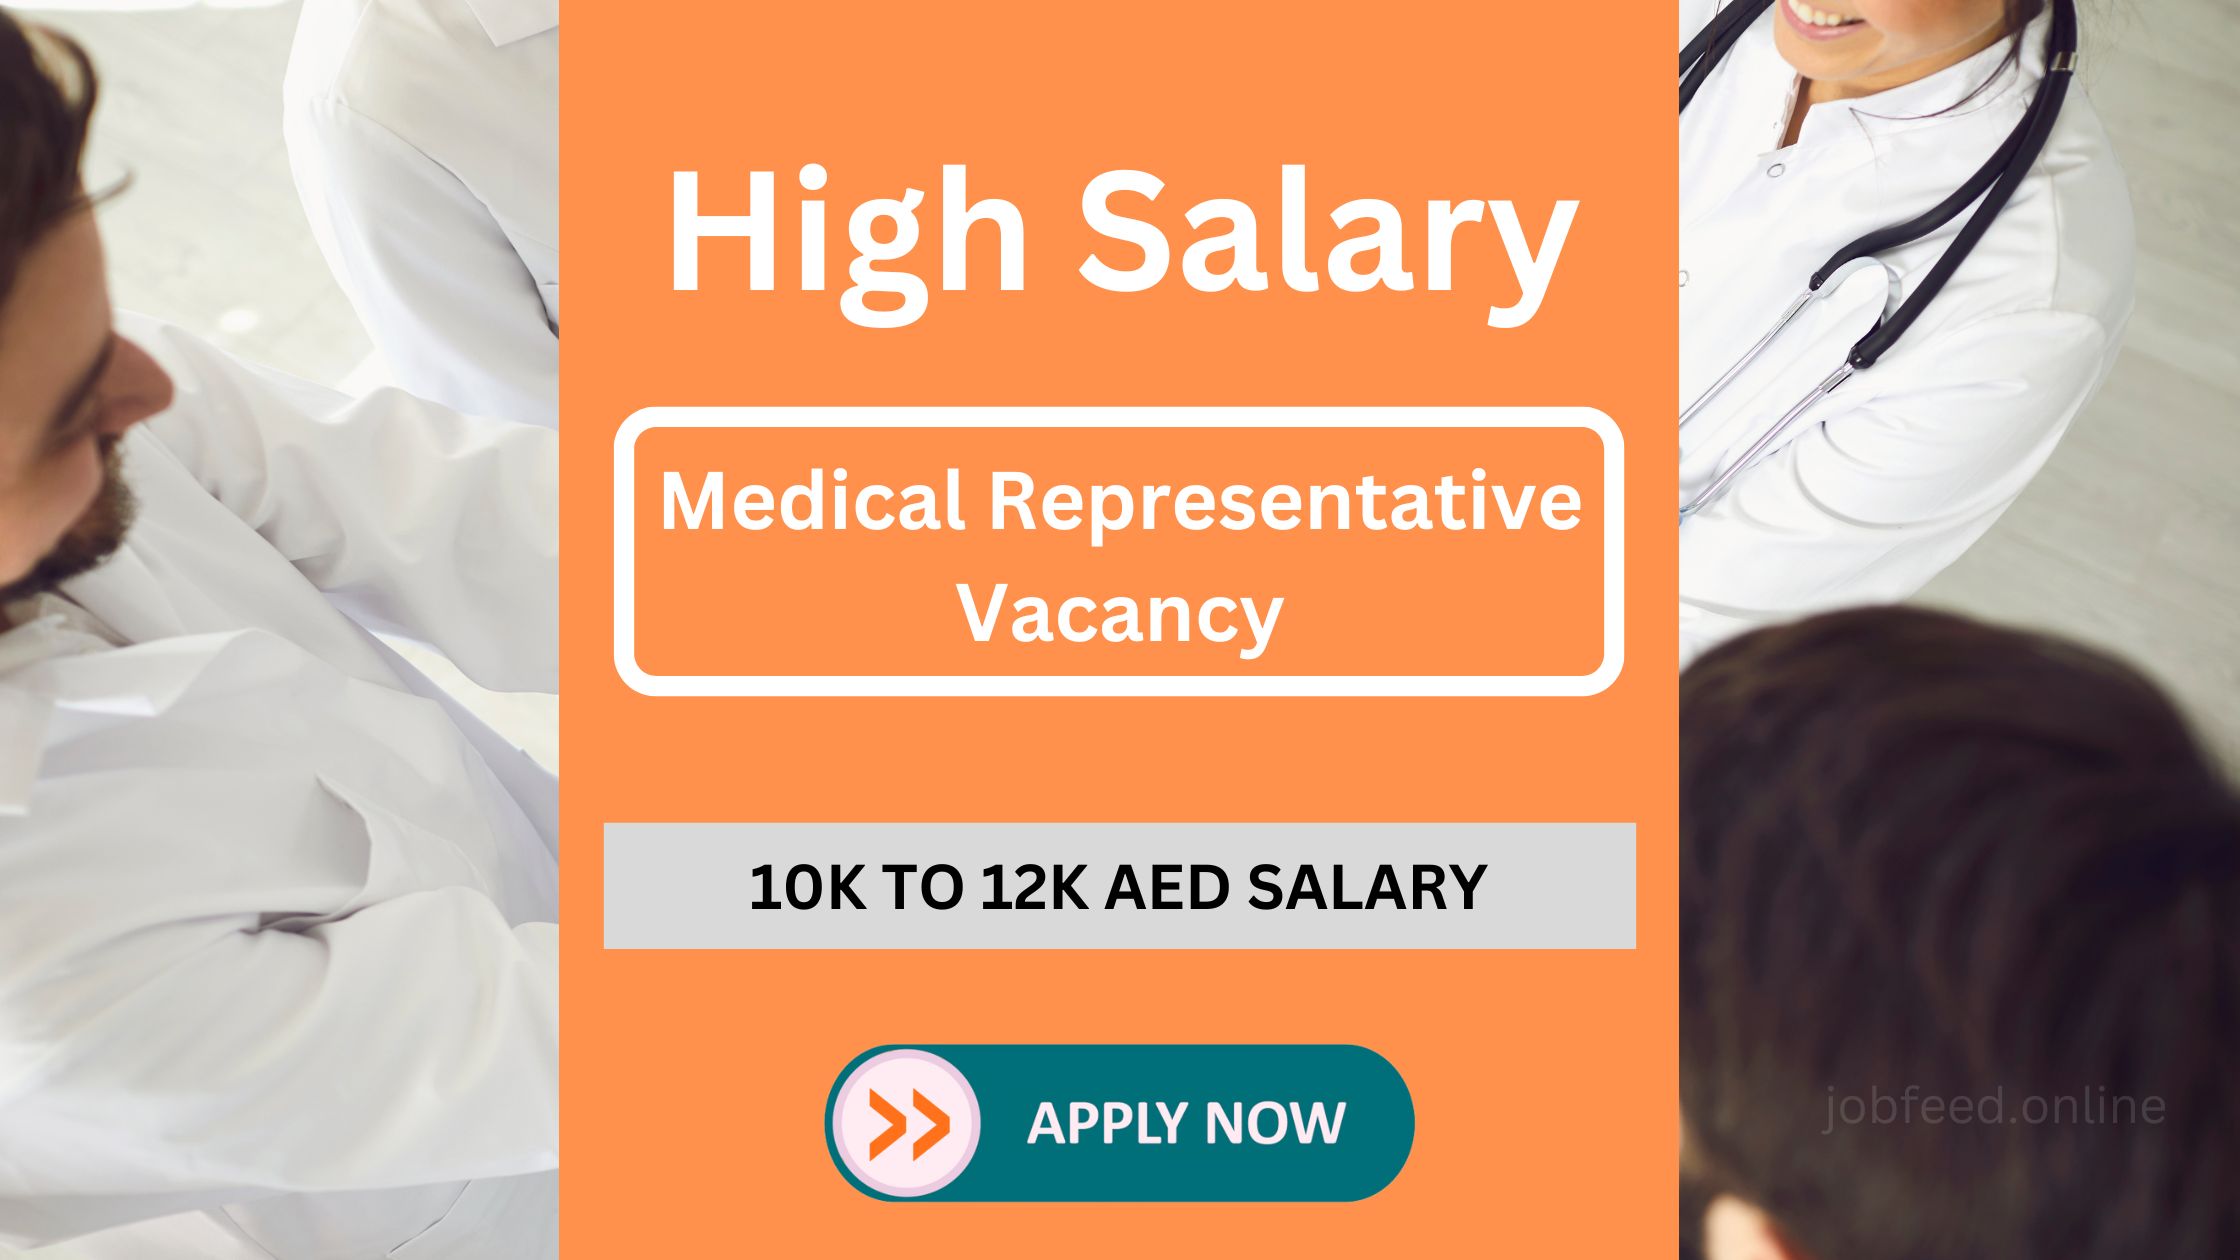 10K to 12K AED Salary - Medical Representative Vacancy